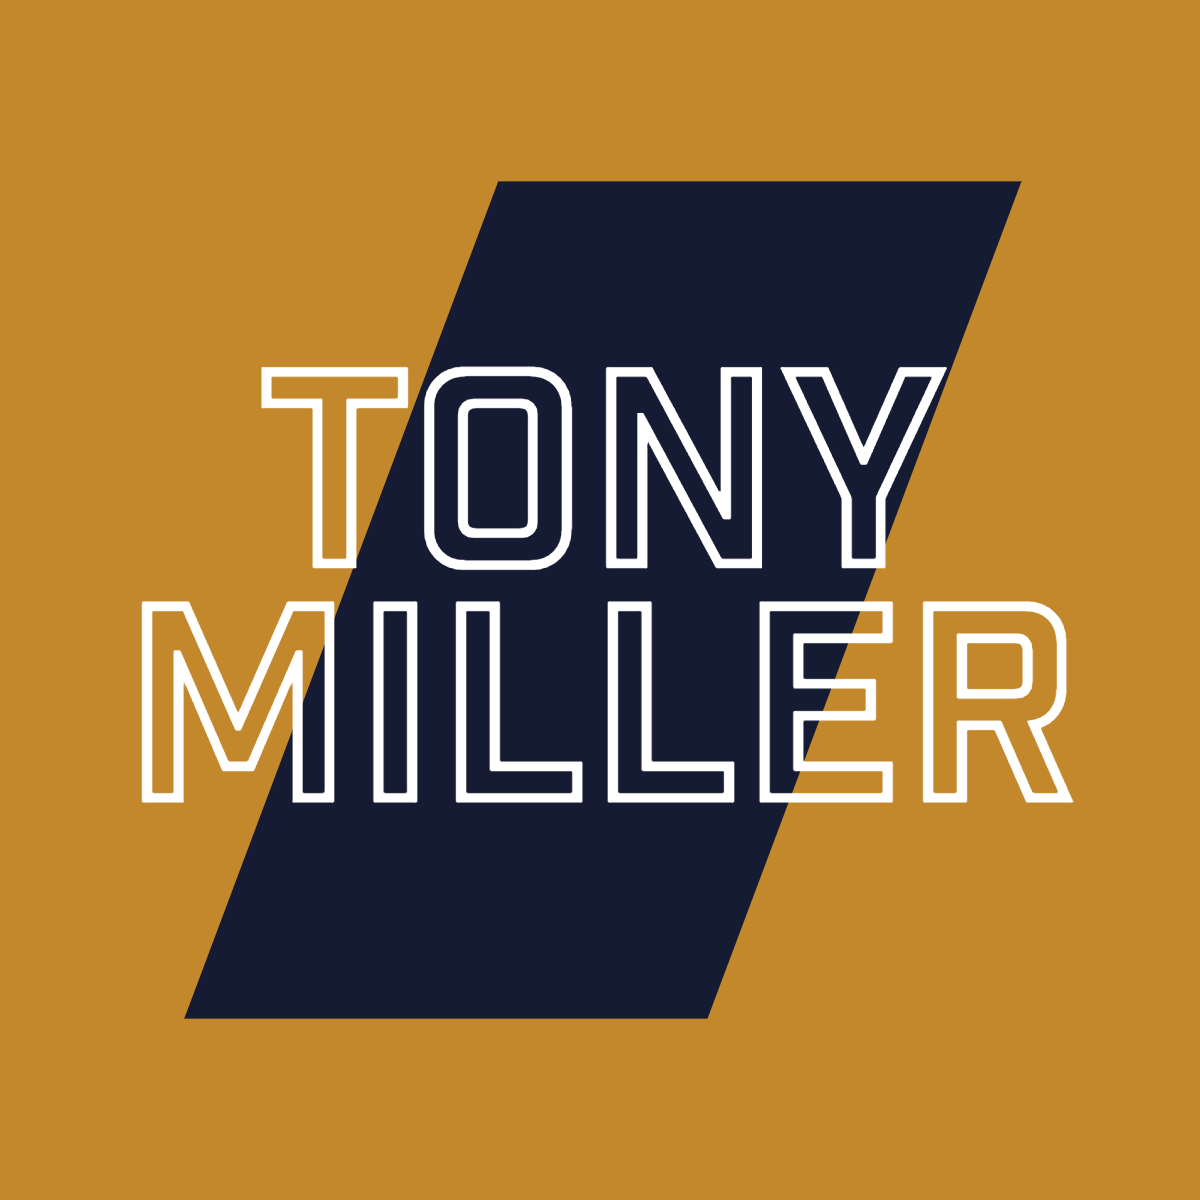 Tony Miller